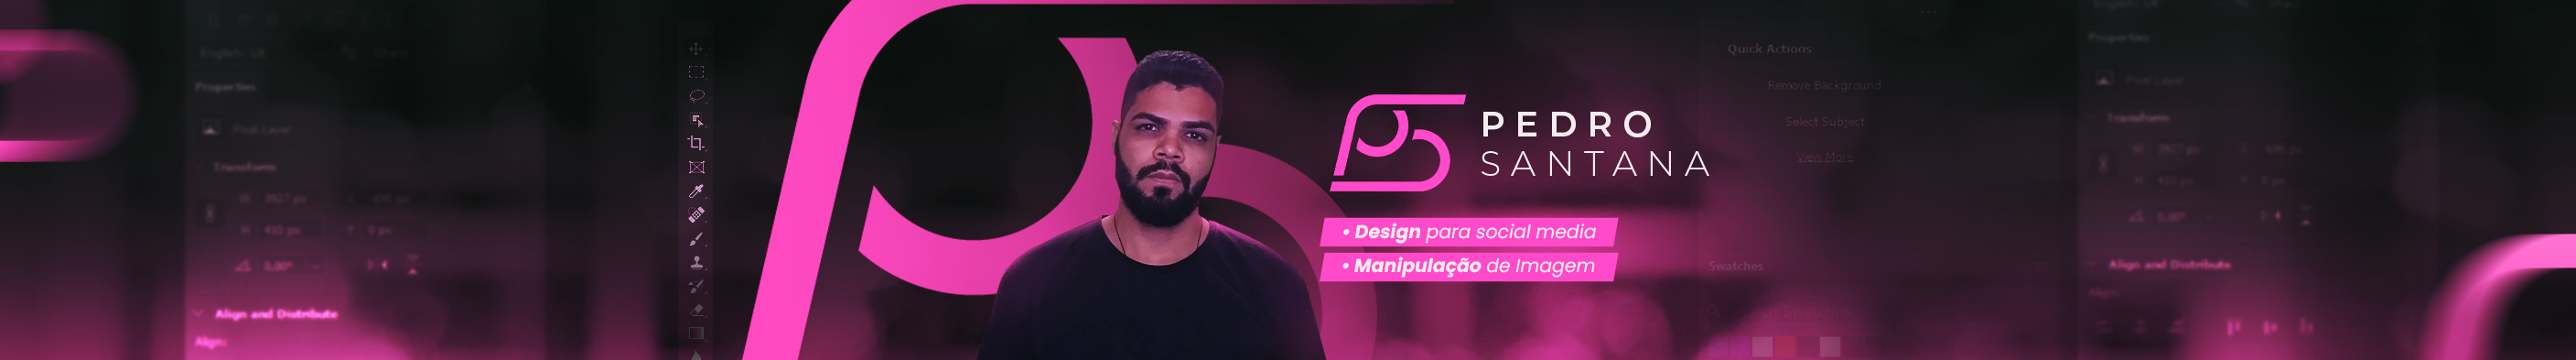 Pedro Santana's profile banner